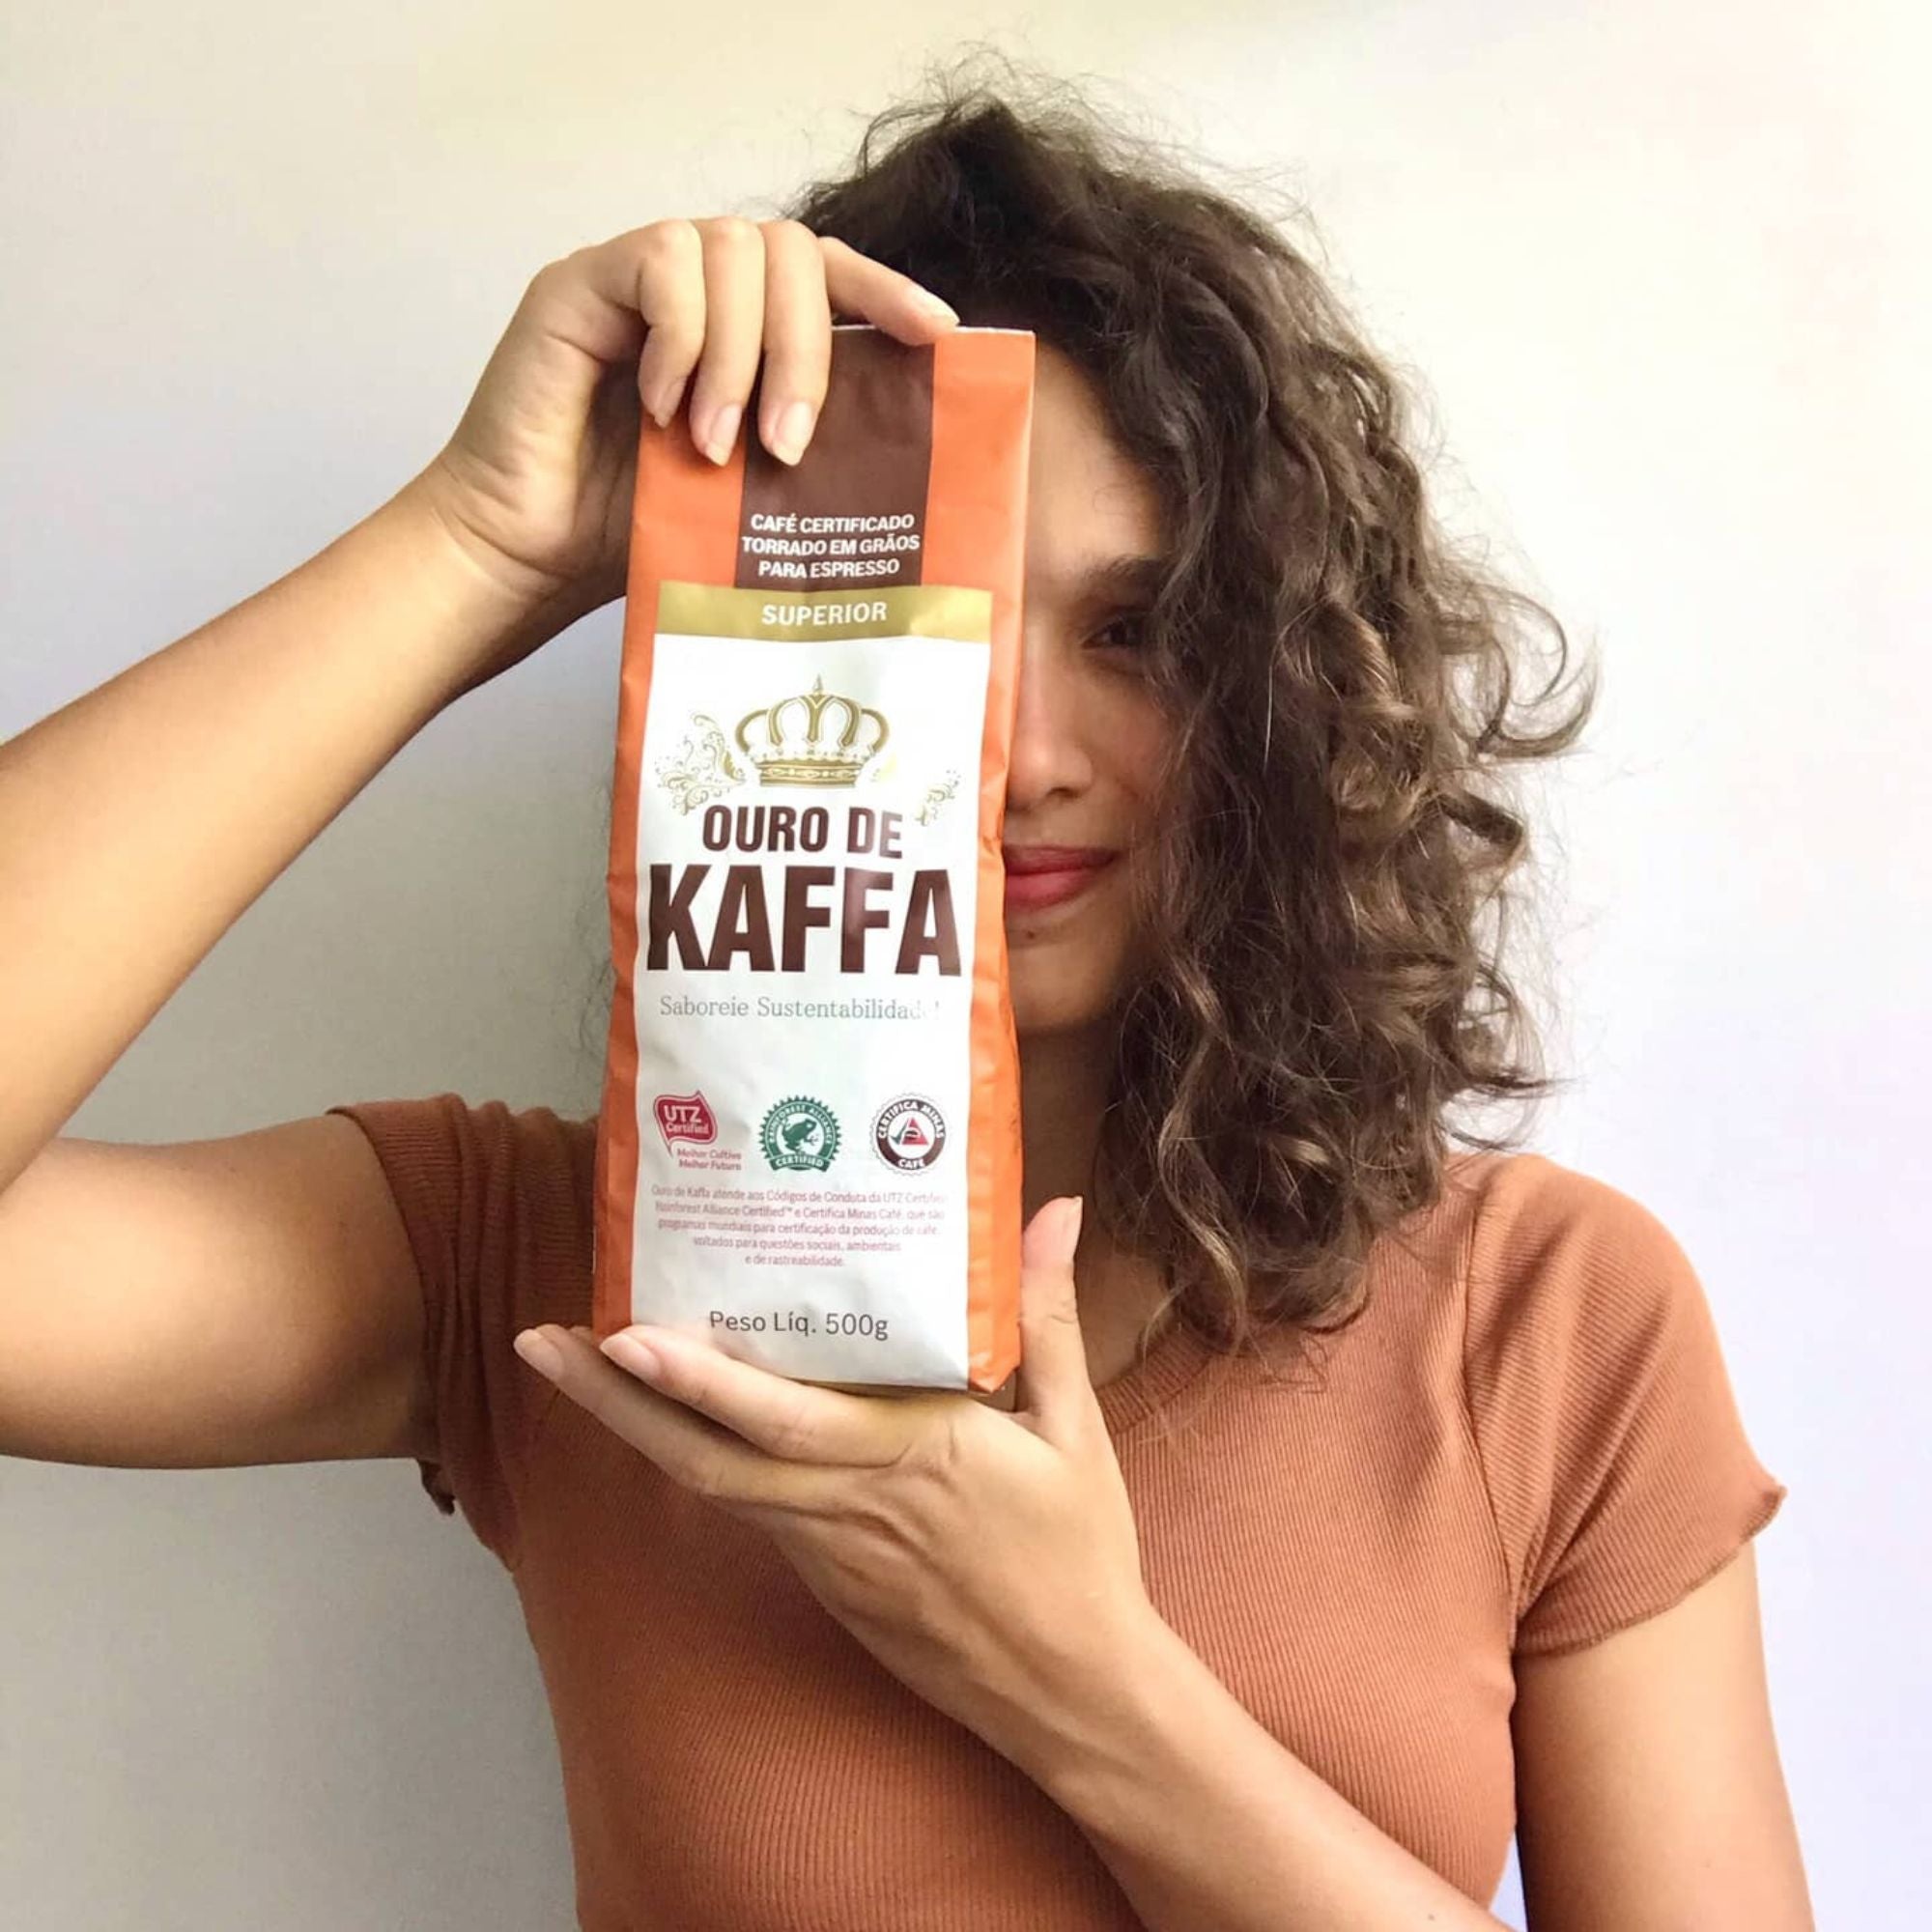 ouro de kaffa brazilian coffee beans arabica smtcoffee